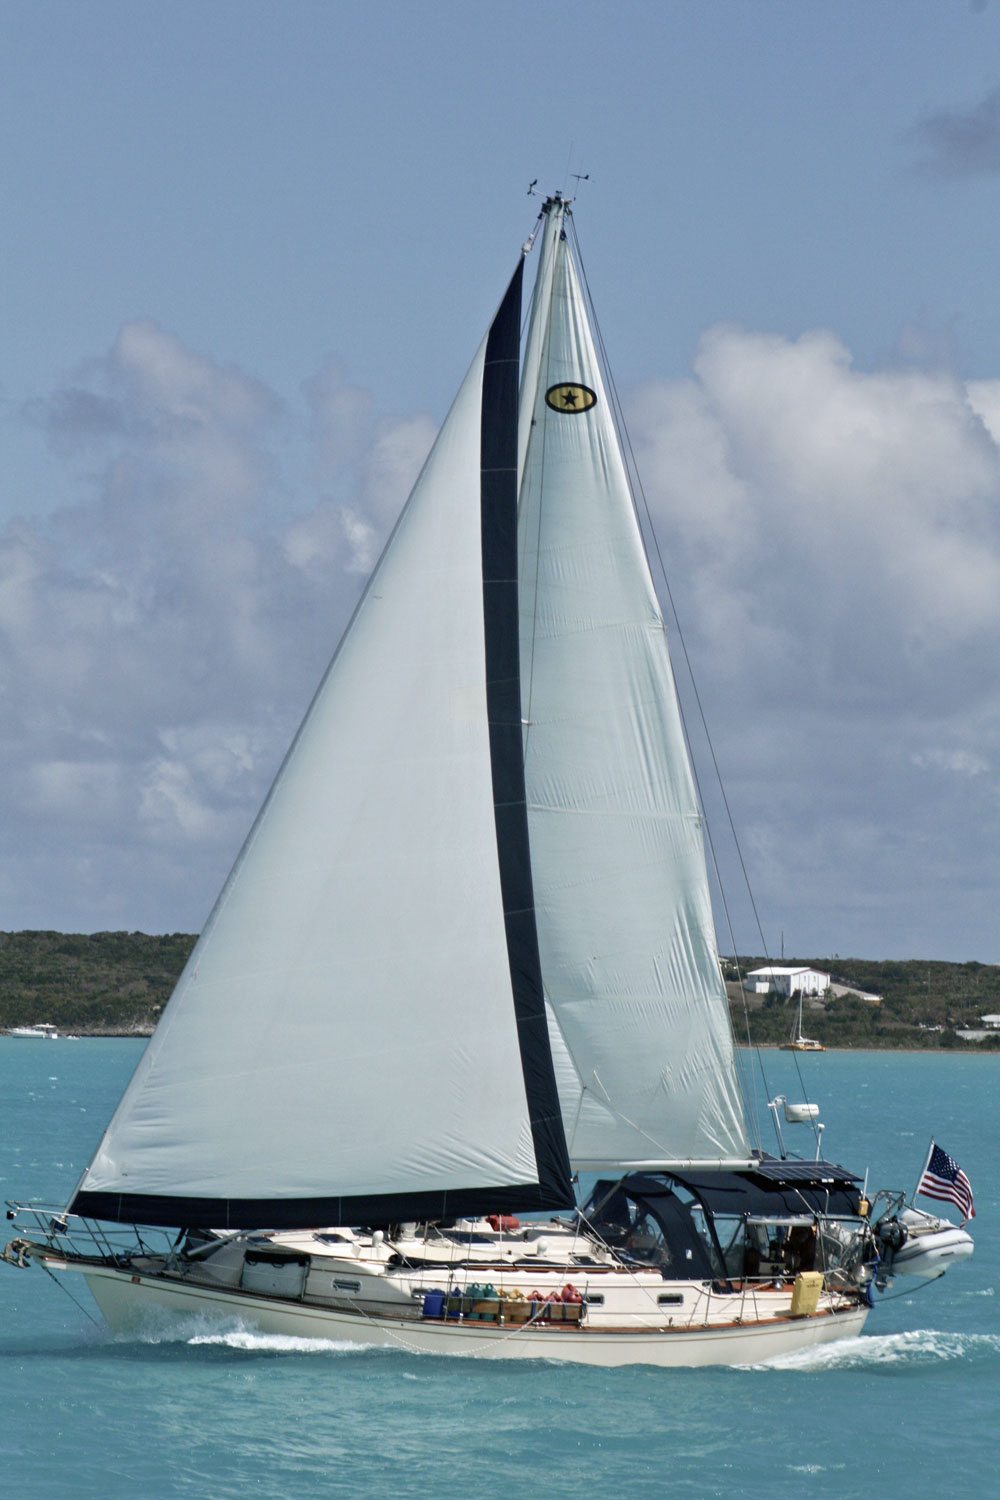 'Wind Waker', an Island Packet 40 sailboat under full sale